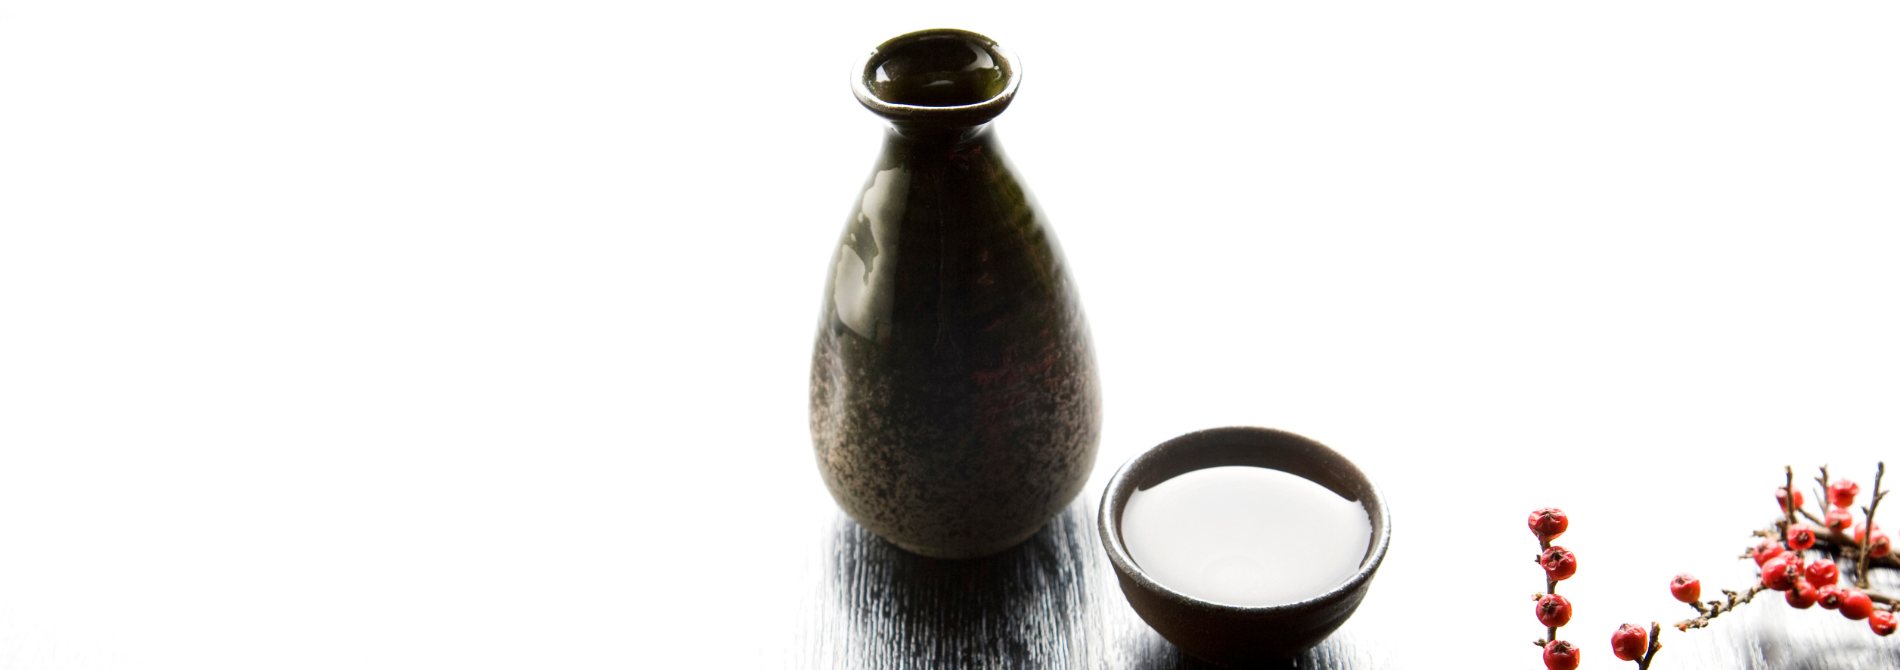 Celebrate World Sake Day With These Three Sake Cocktails!